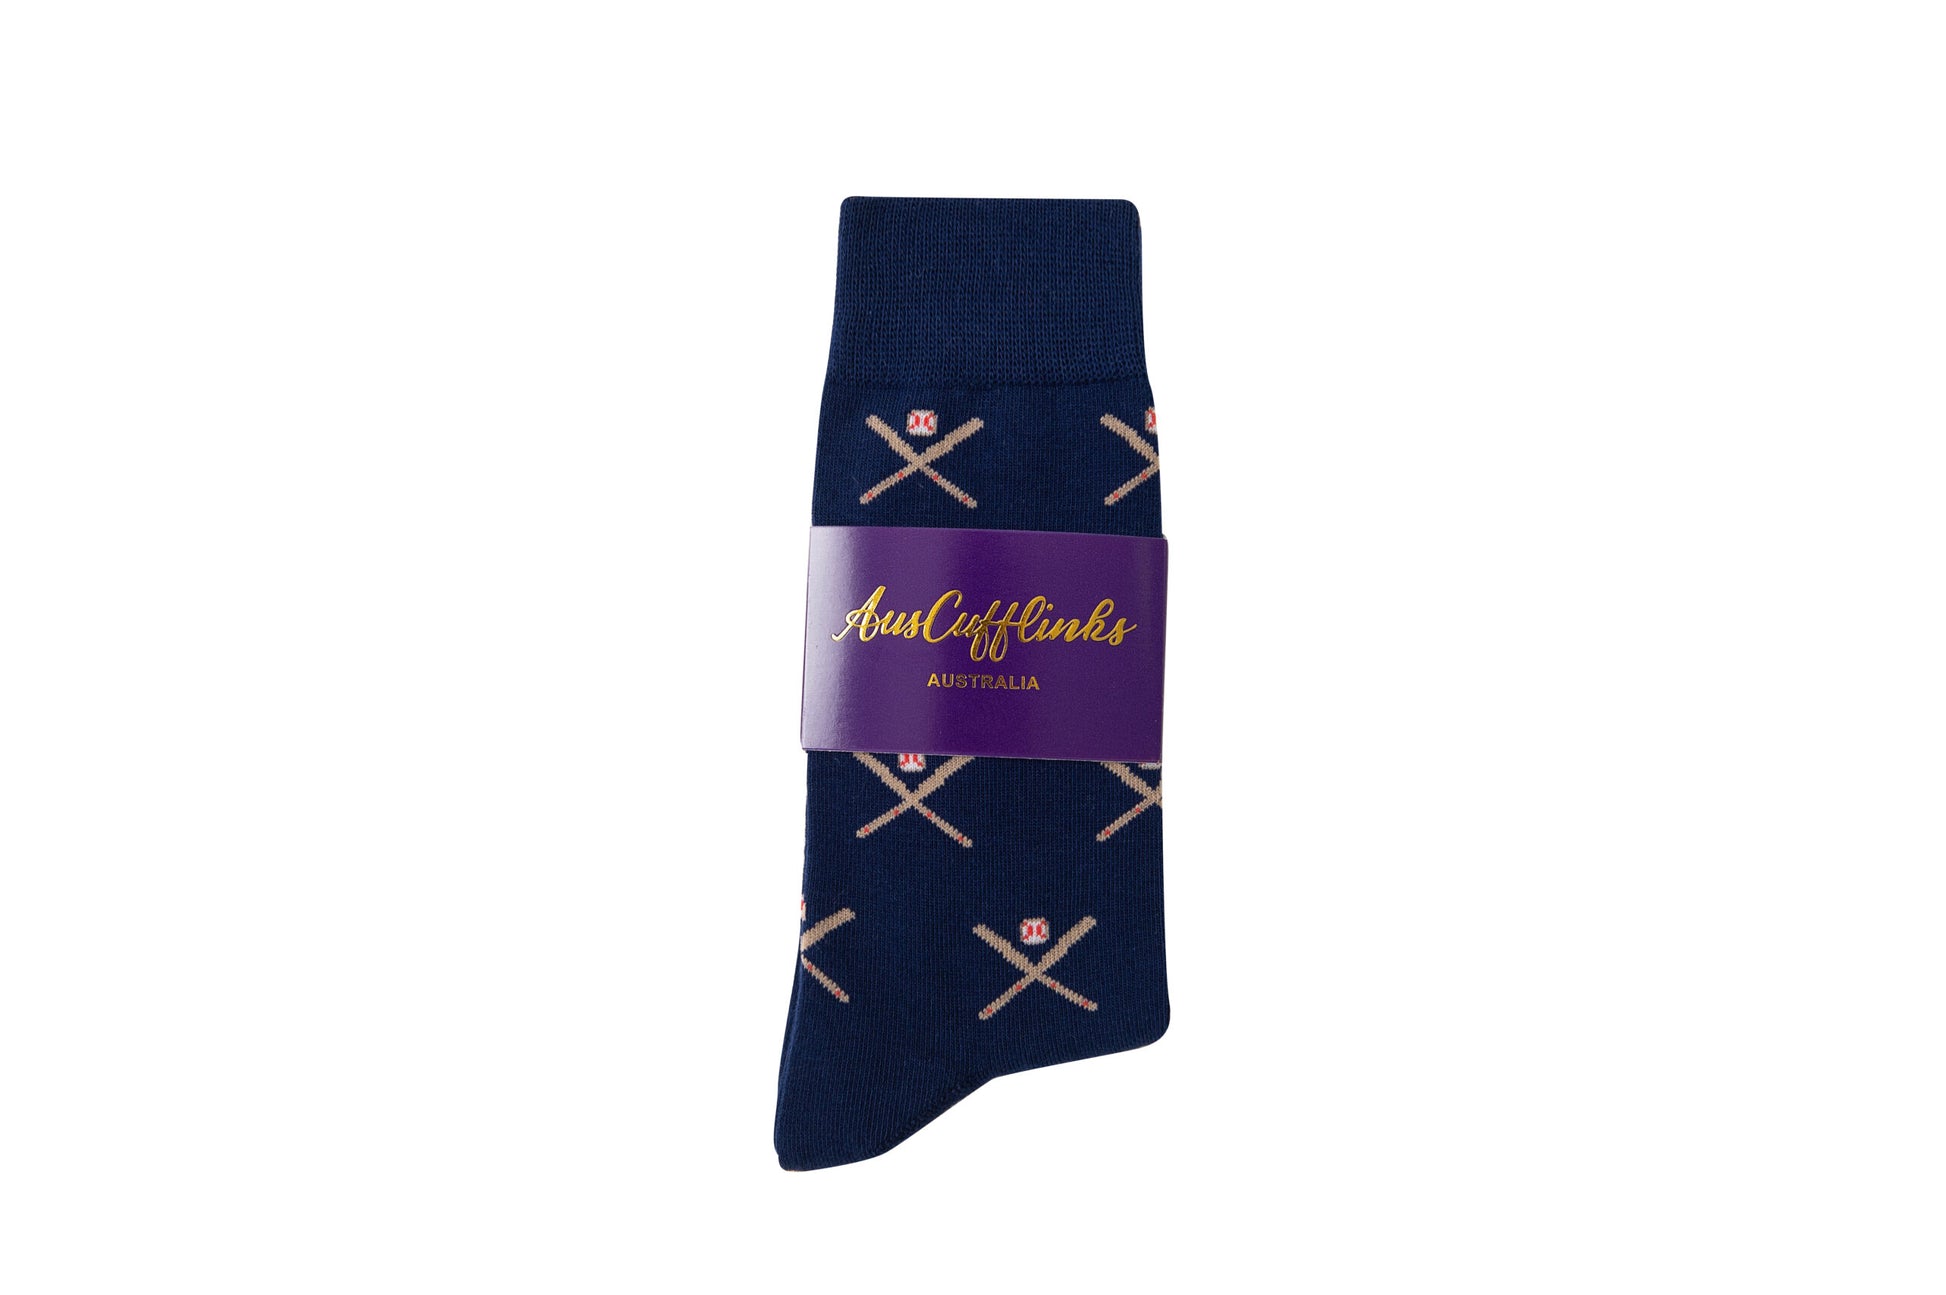 A navy sock with Crossed Baseball Socks pattern.